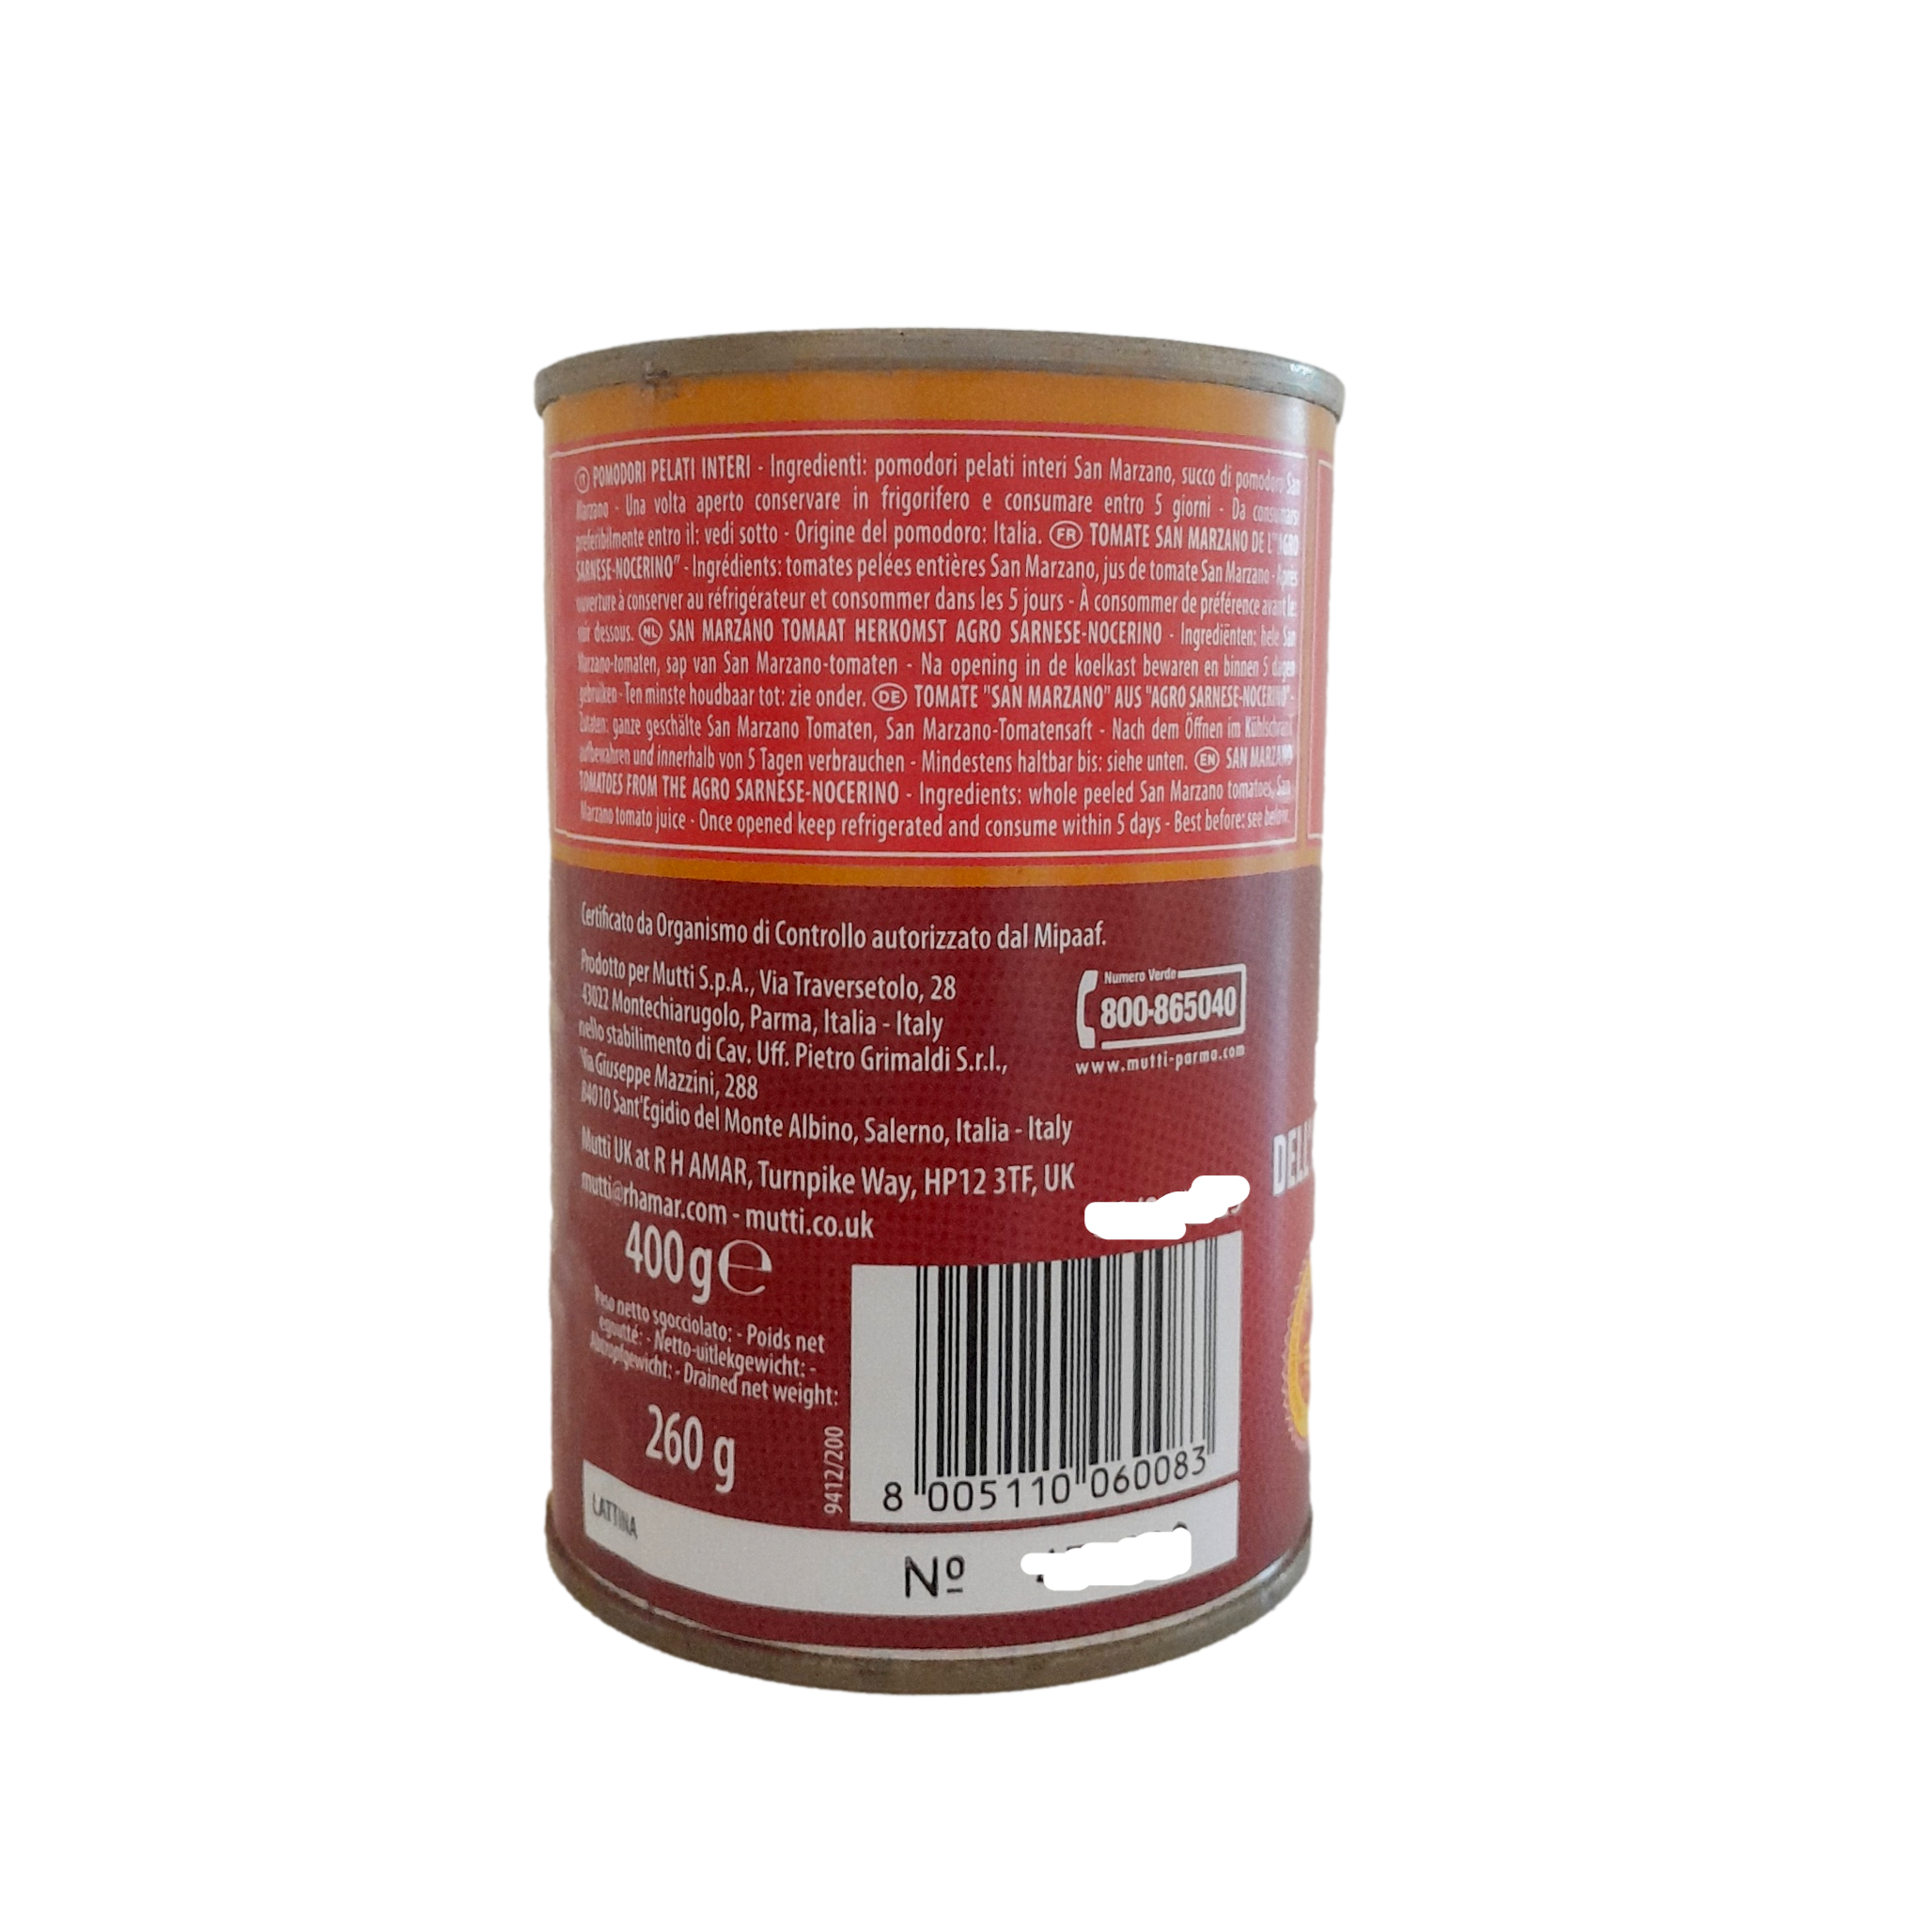 Mutti Peeled Tomatoes 400 g | Category PEELED